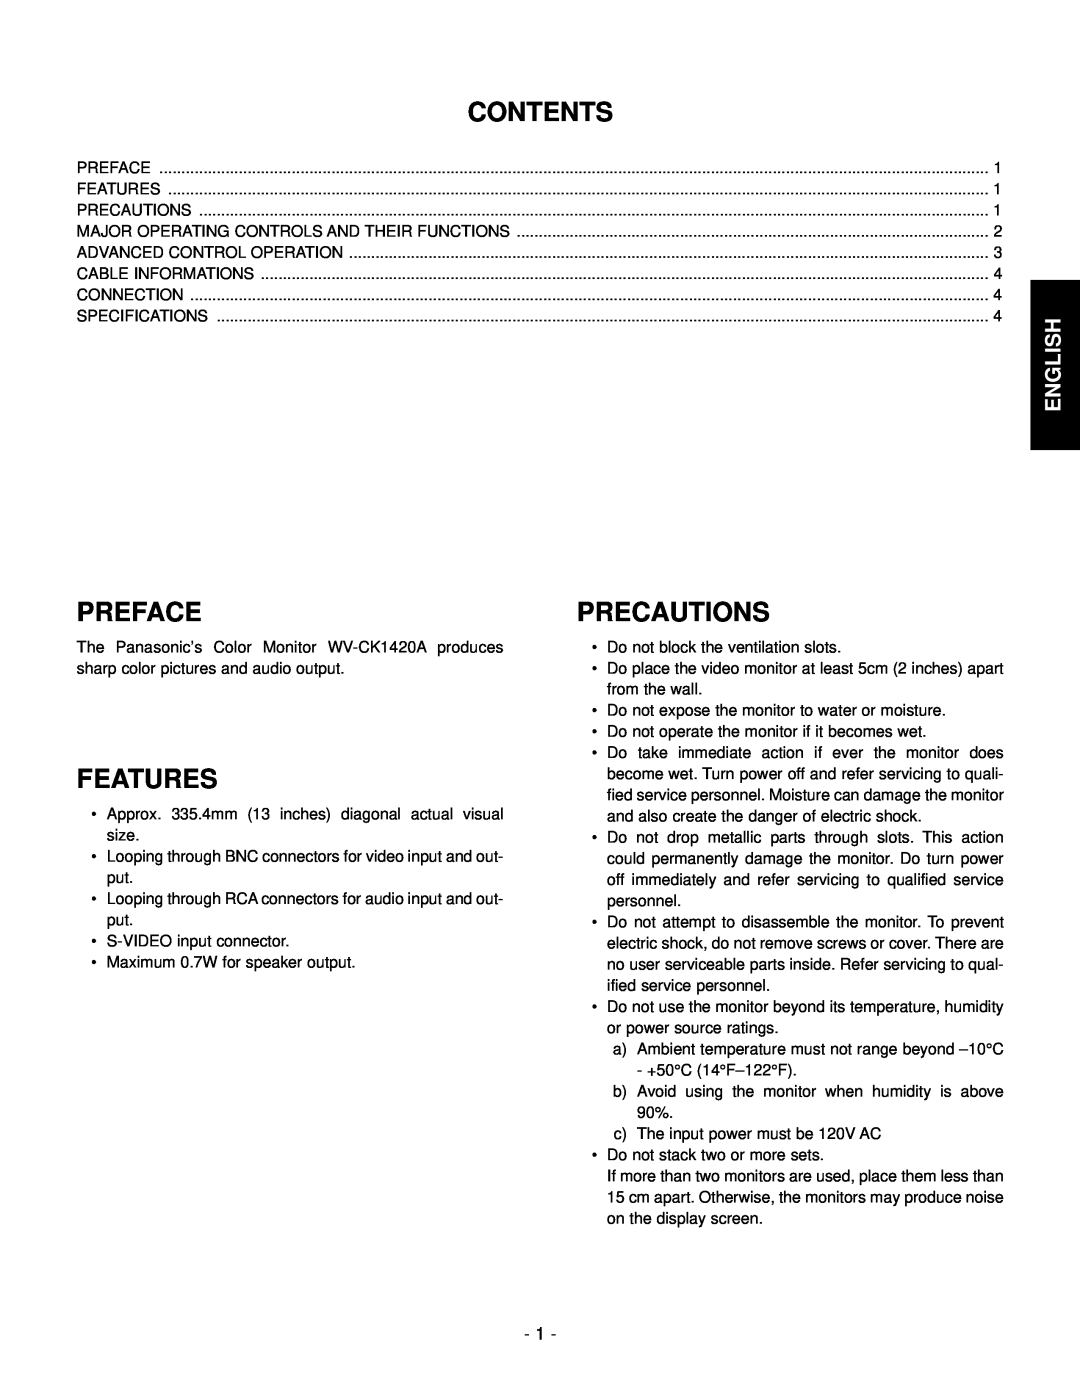 Panasonic WV-CK1420A manual Contents, Preface, Features, Precautions, English 